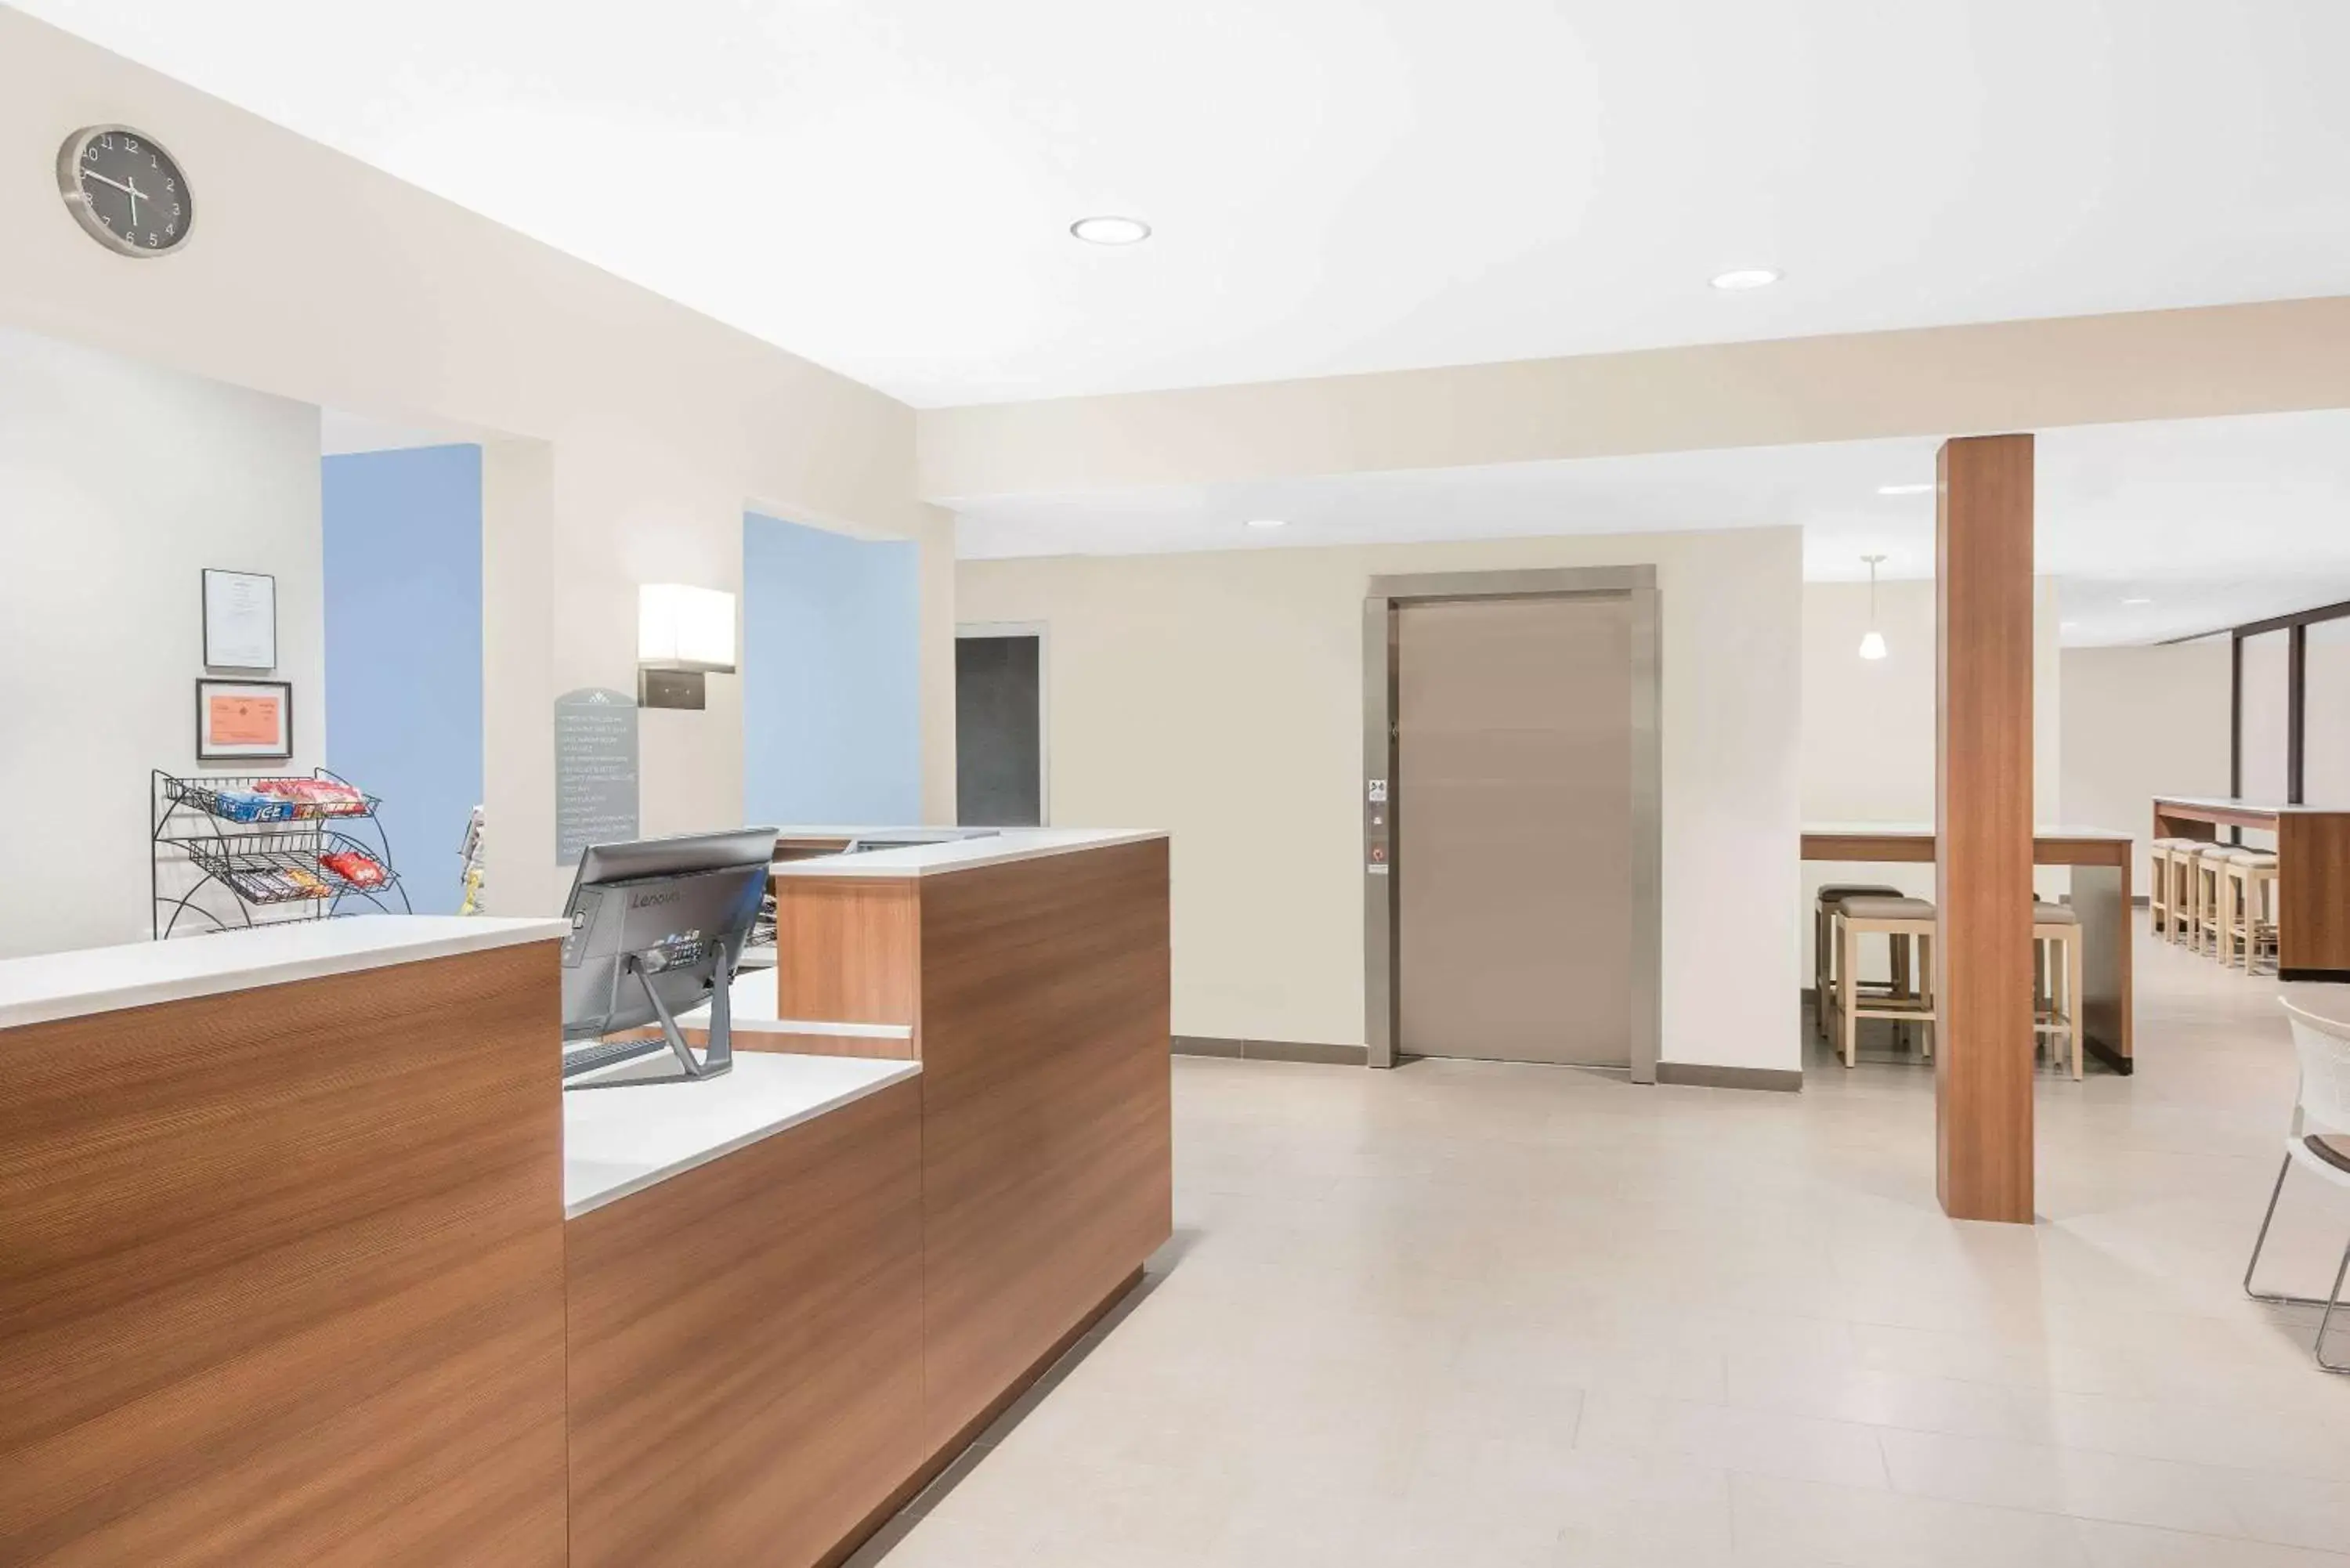 Lobby or reception in Microtel Inn & Suites by Wyndham Binghamton